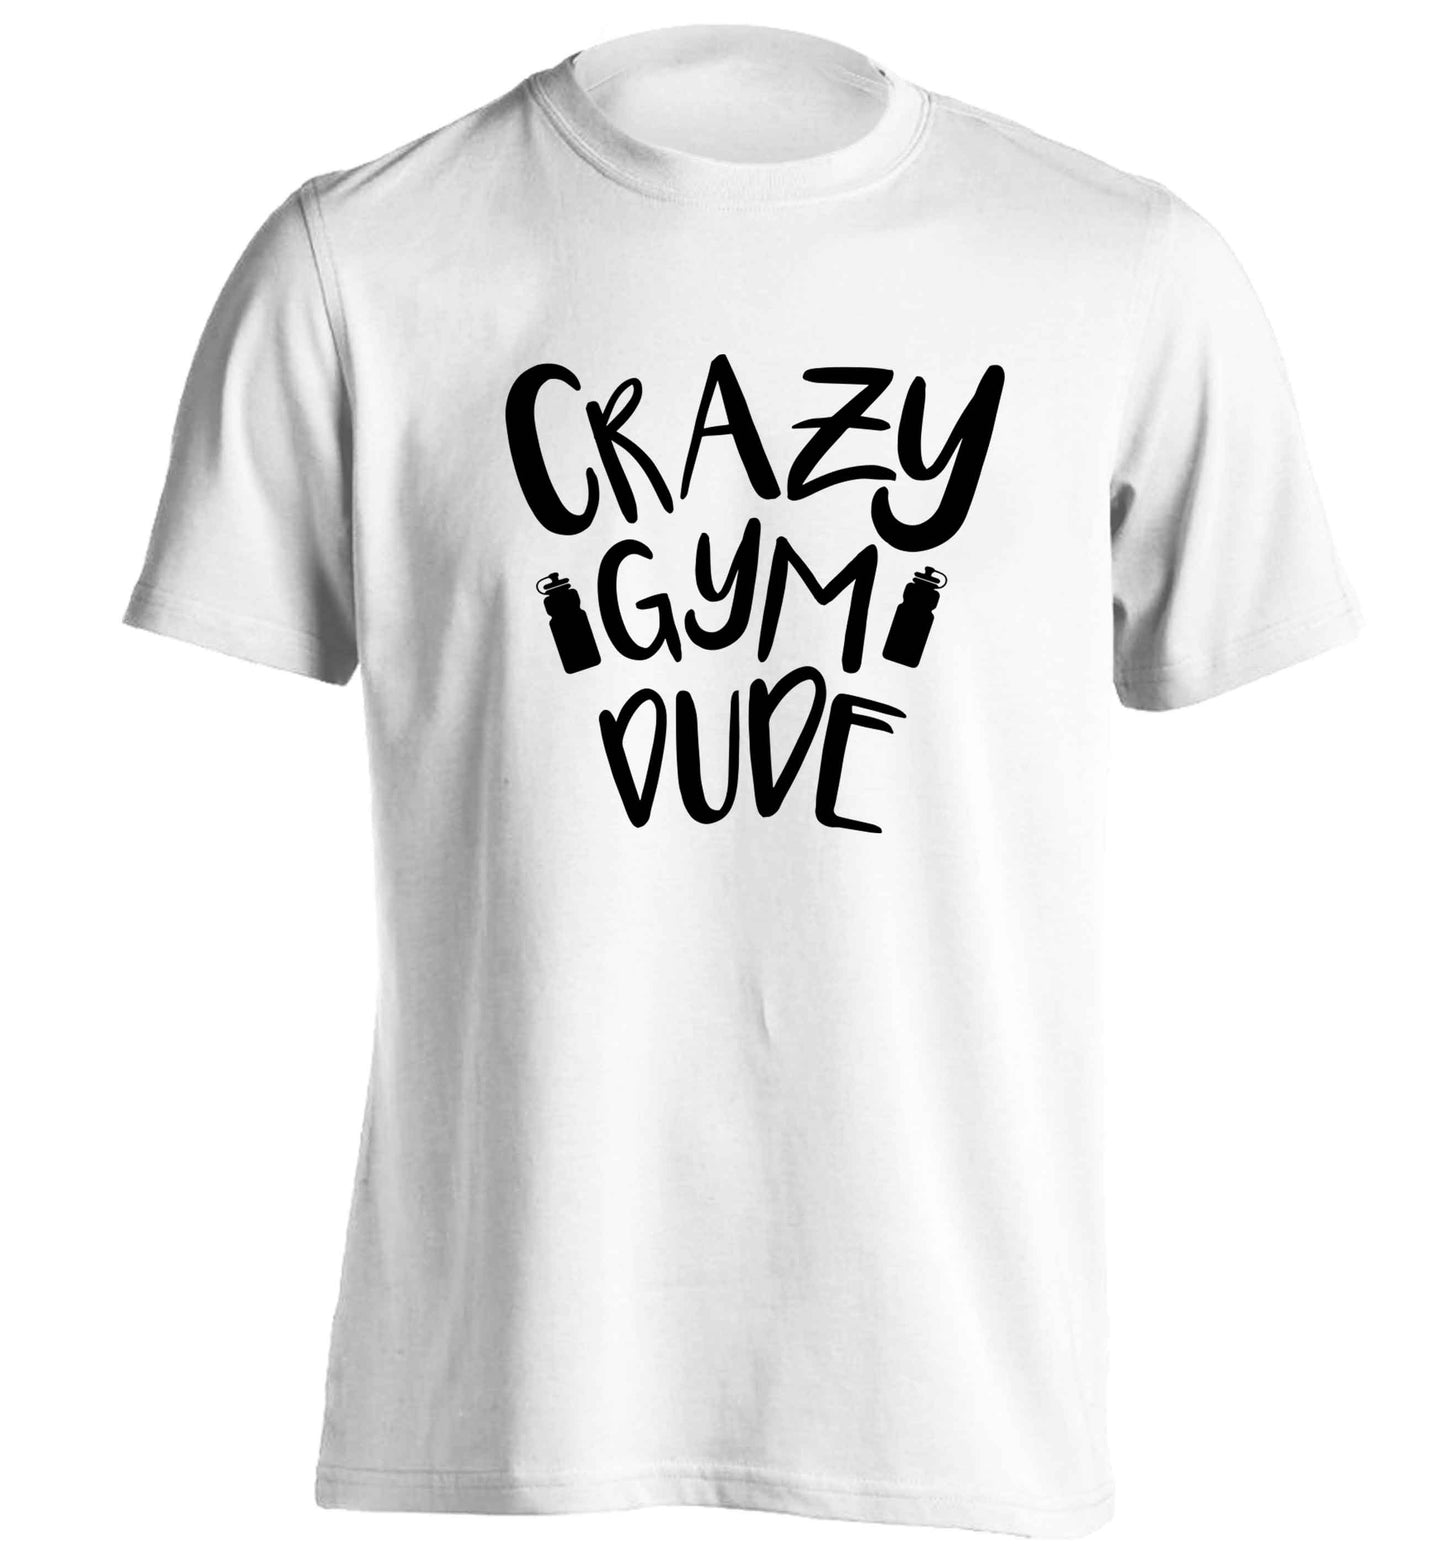 Crazy gym dude adults unisex white Tshirt 2XL